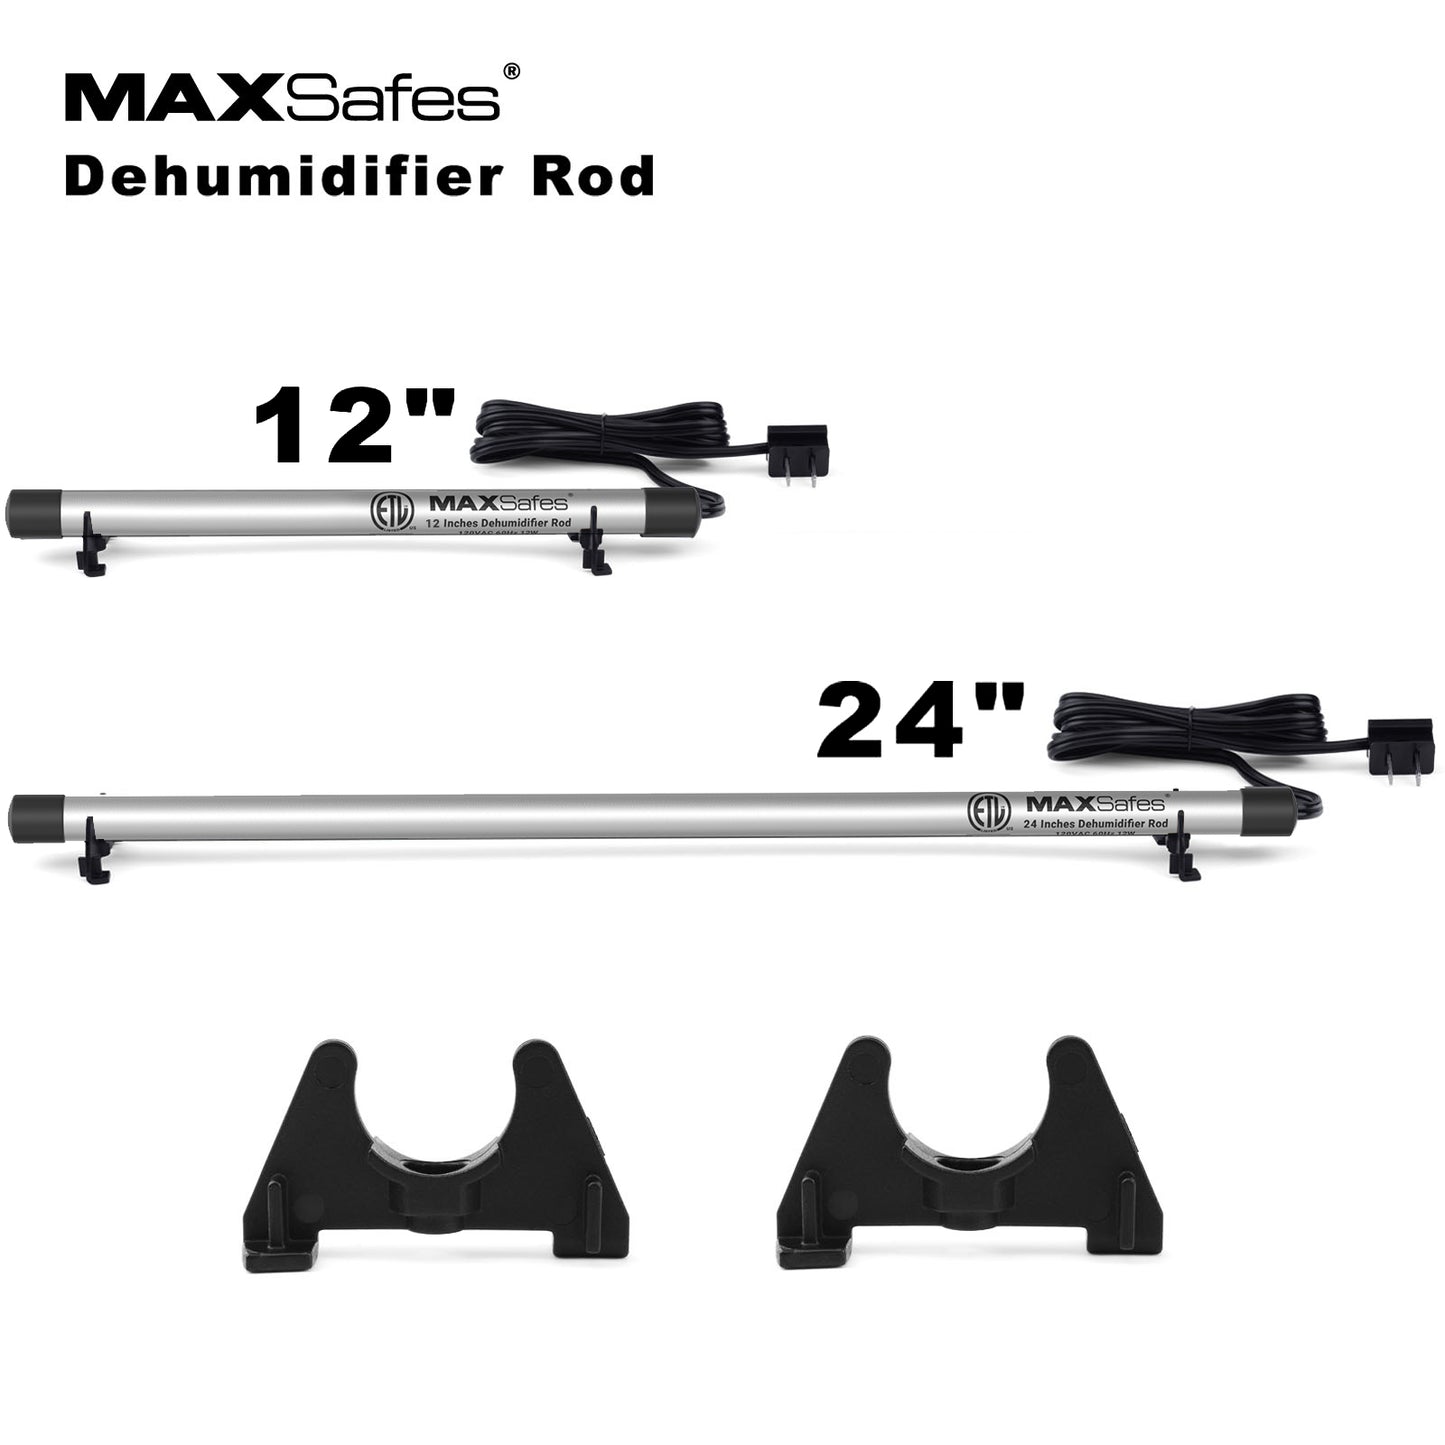 Gun Safe Dehumidifier Rod, Dry Golden Rod - Easy Installation Plug-in Electric Dehumidifier Eliminates Moisture for Gun Safes & Cabinets - MAXSafes®Dehumidifier Rod 24"